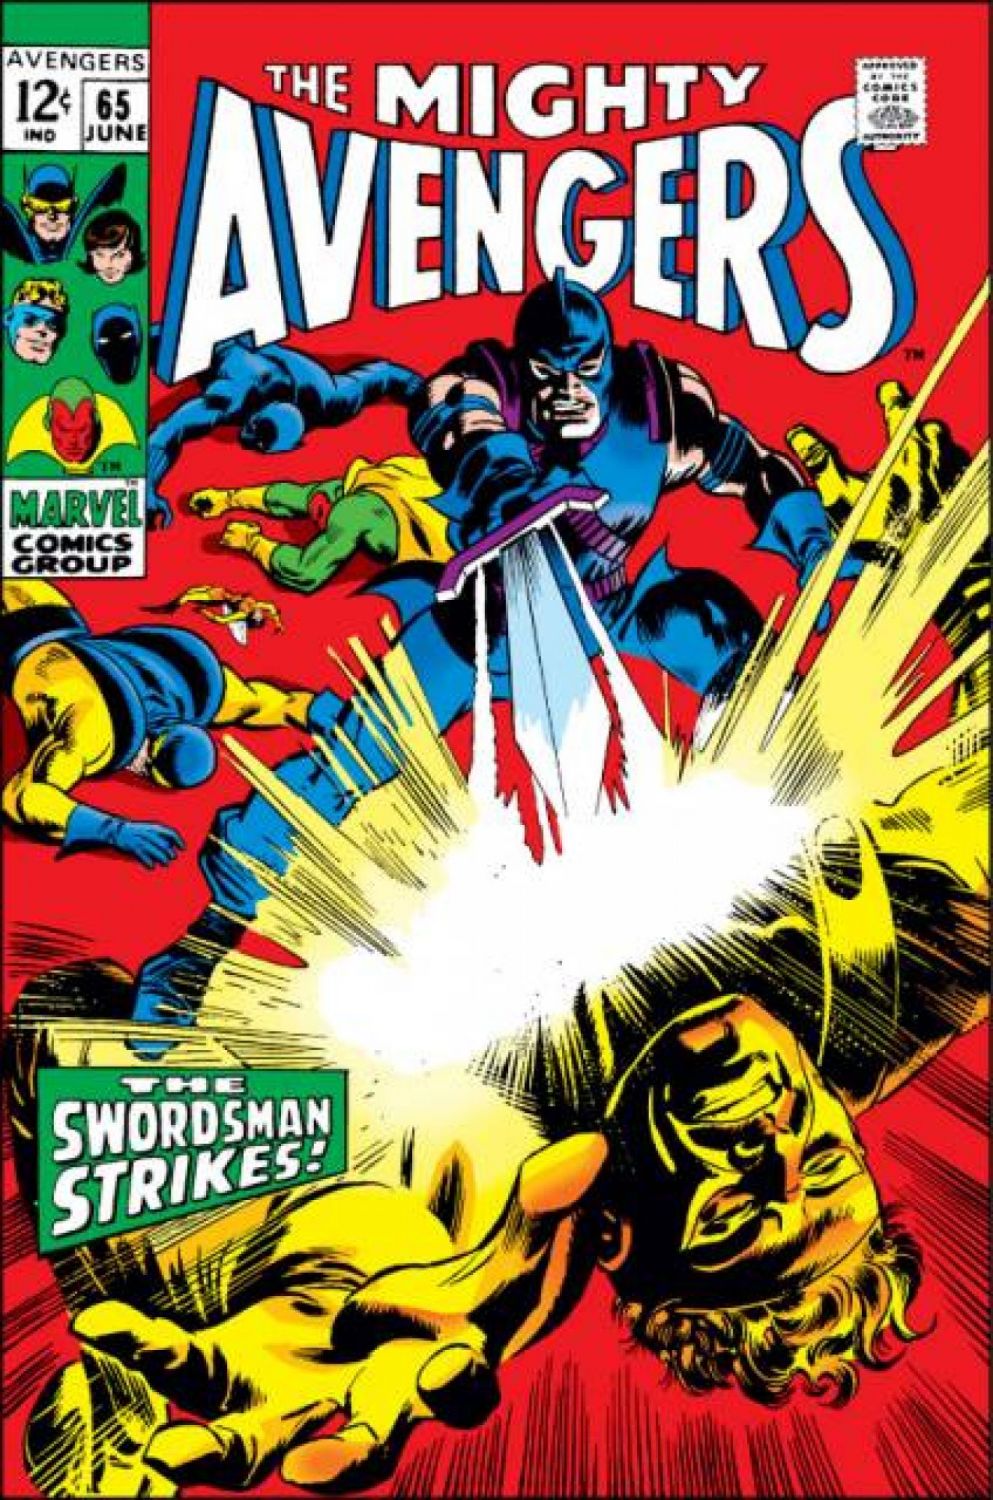 Avengers 65, Jun 1969, Marvel Iconic Comics Online Iconic Comics